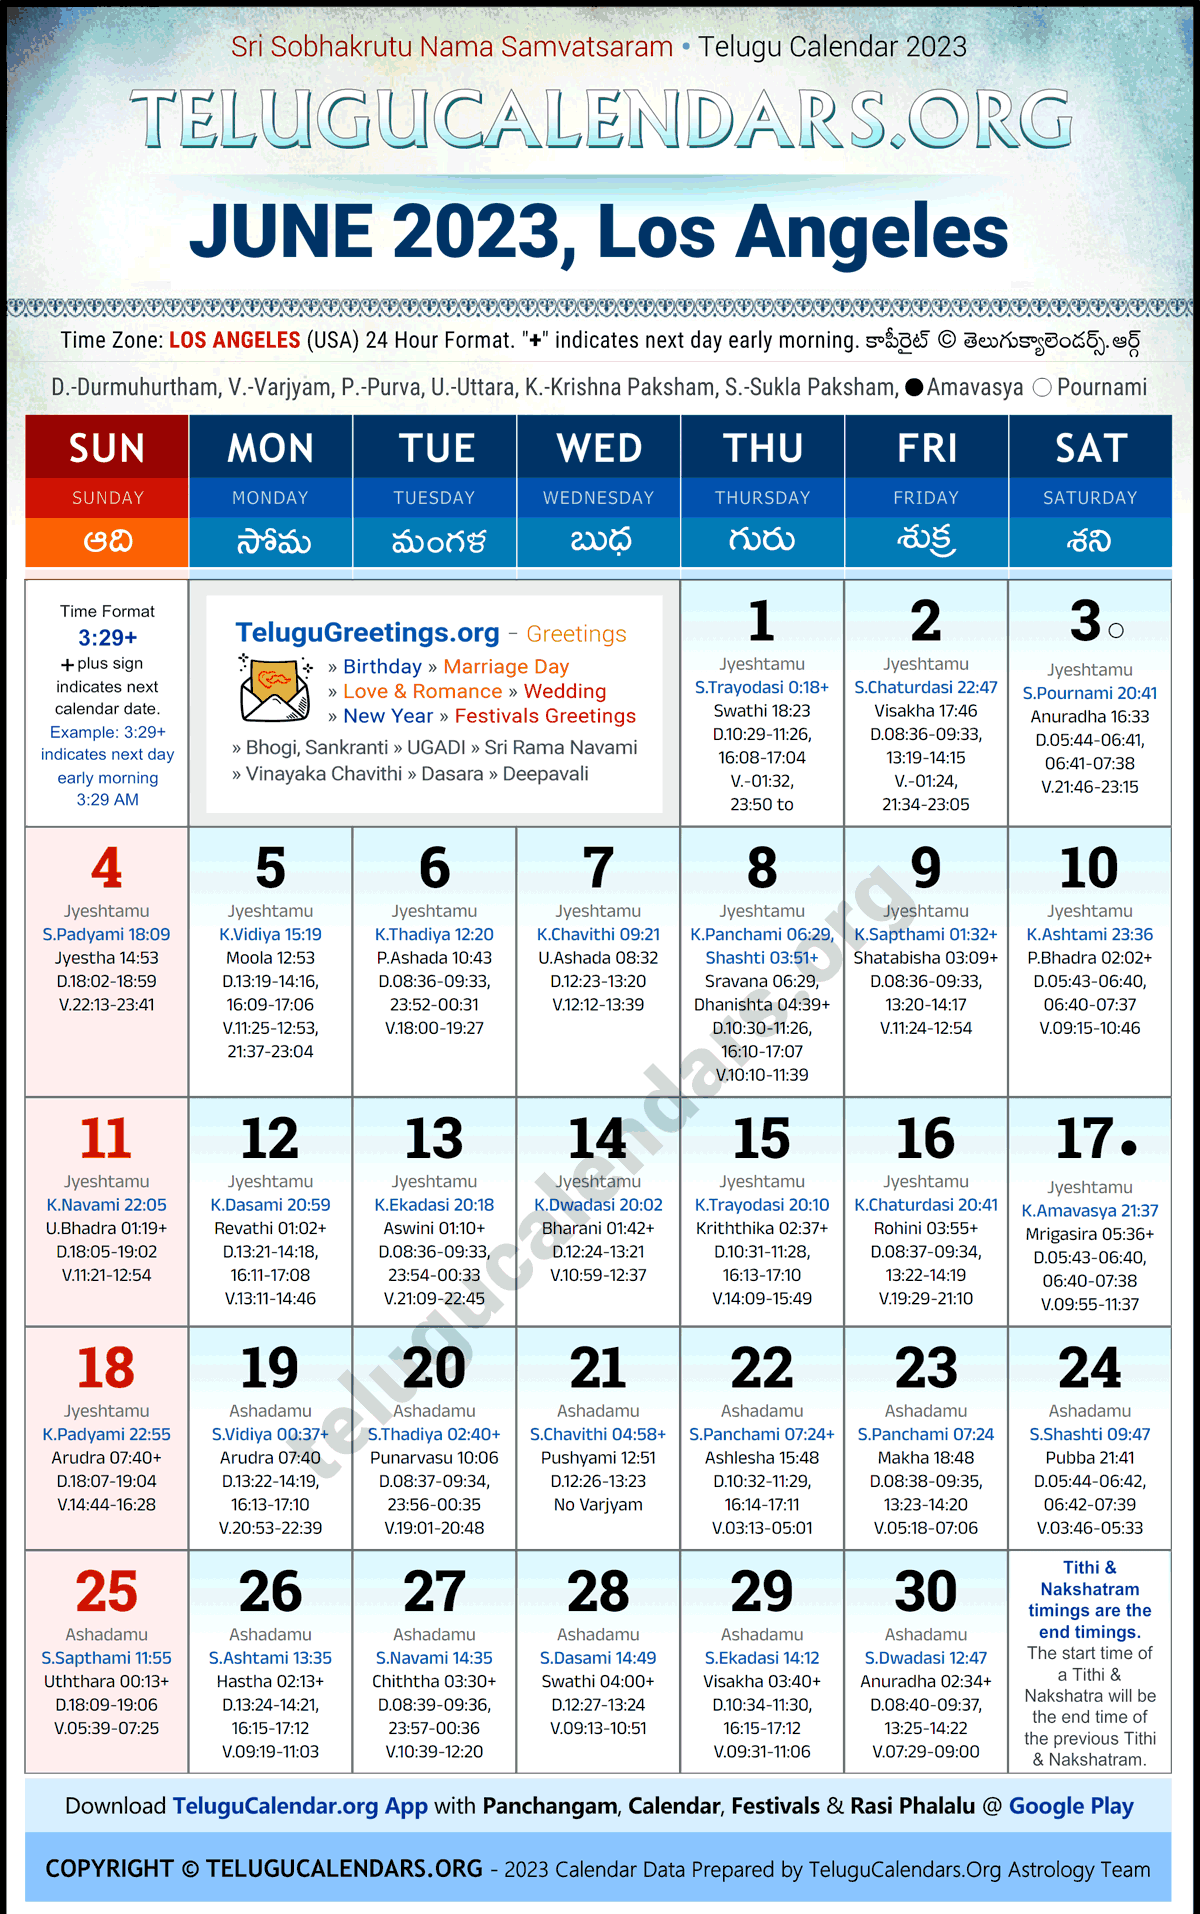 Telugu Calendar 2023 June Festivals for Los Angeles